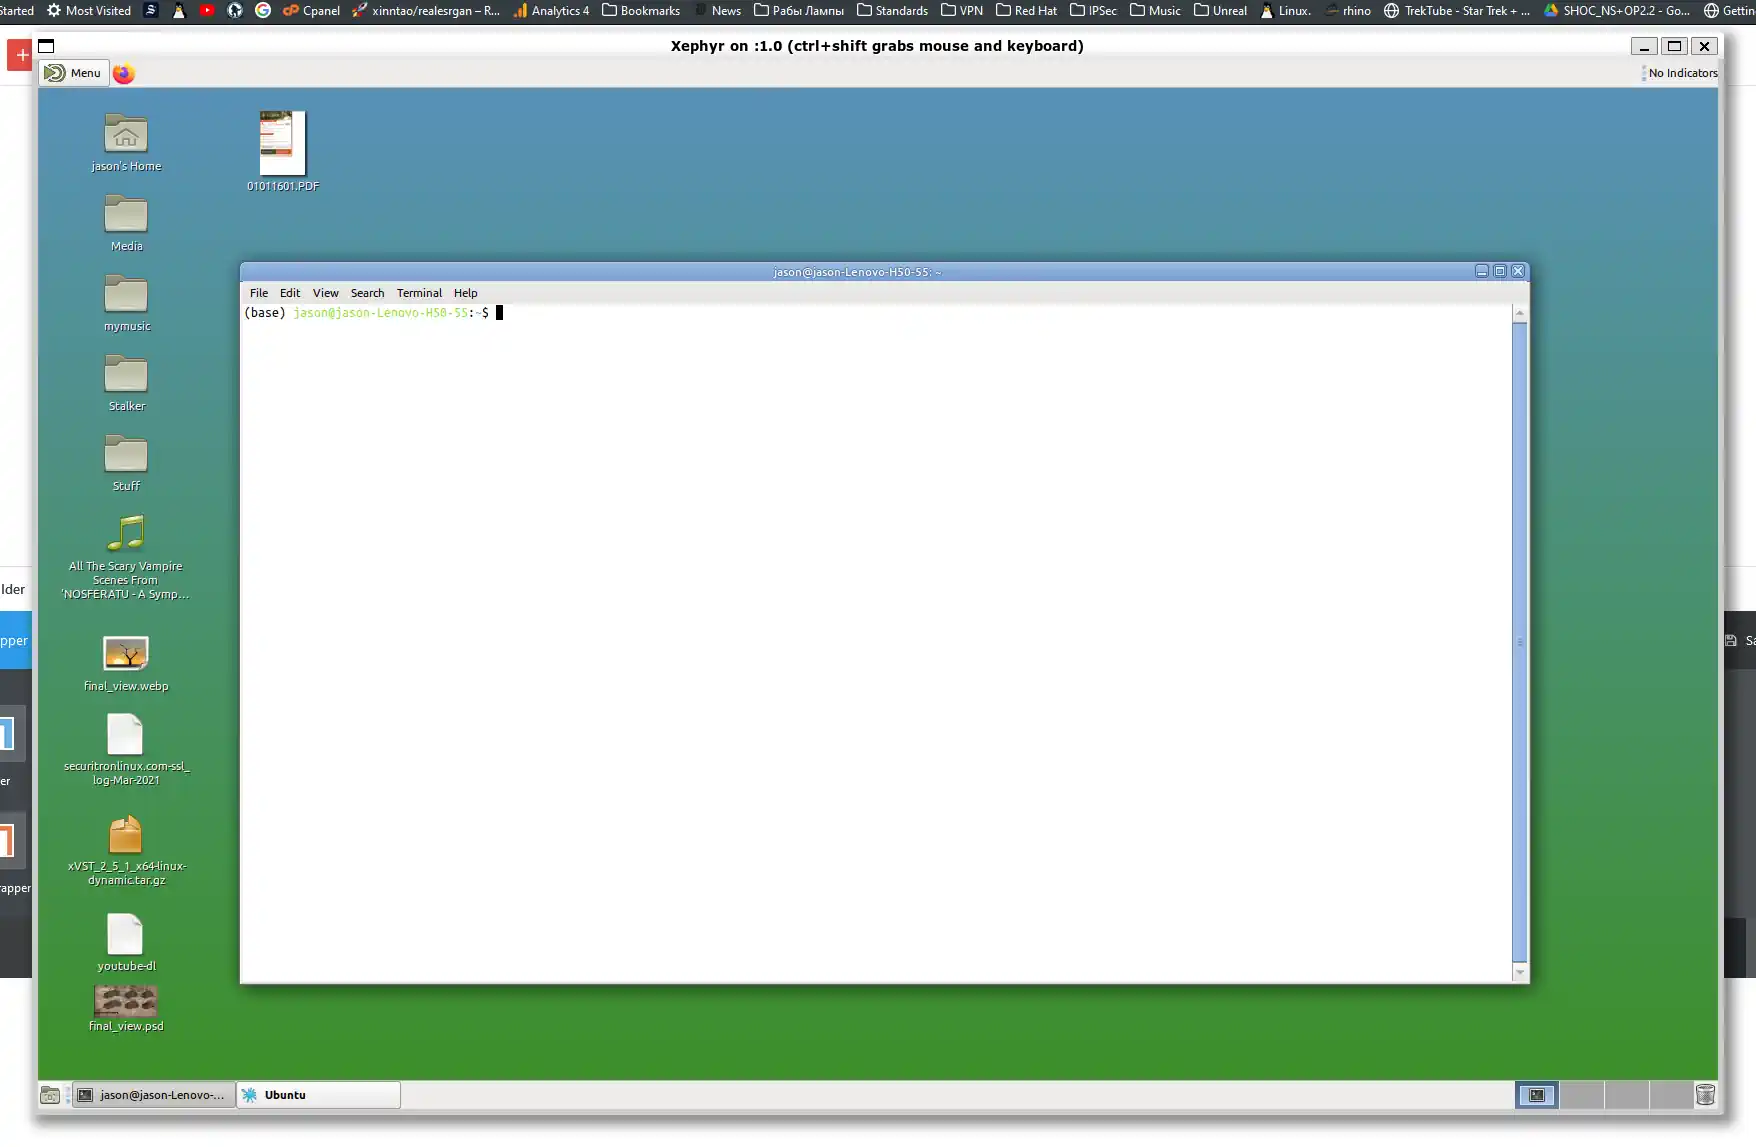 Linux MATE desktop running in Xephyr.